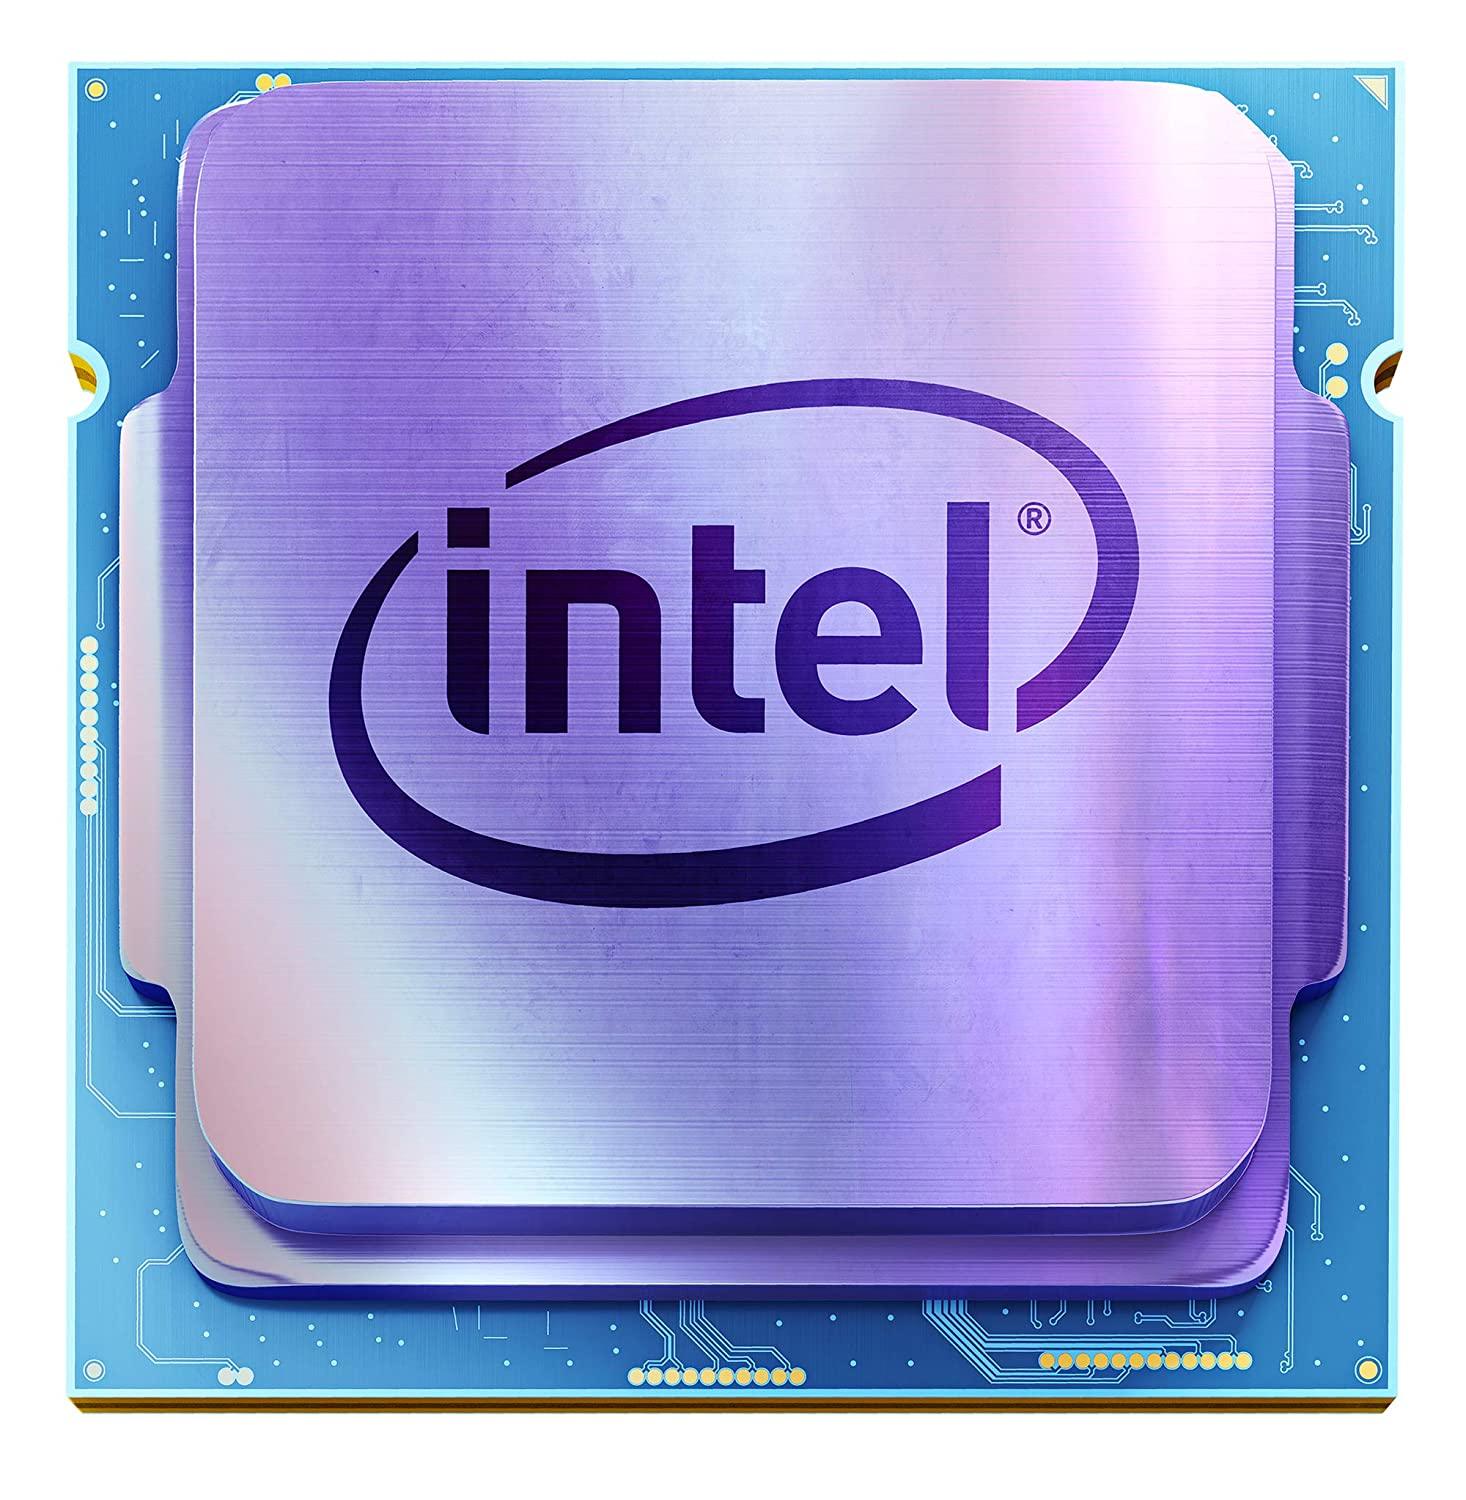 Intel Core i7-10700 Processor (16M Cache, up to 4.80 GHz)-Processor-dealsplant